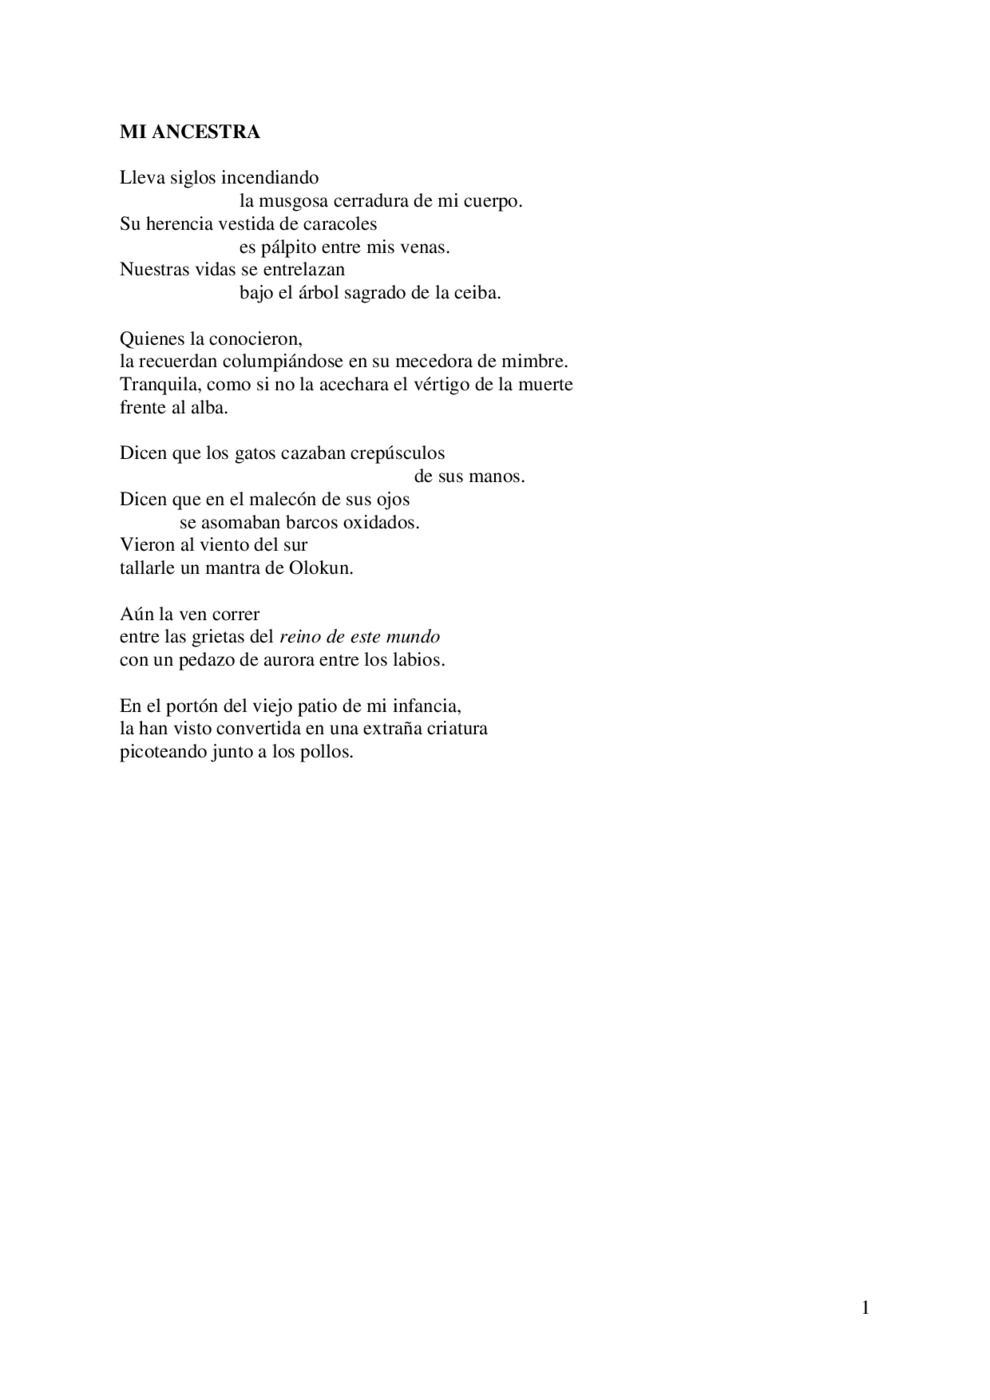 Spanish text of the poem MI ANCESTRA